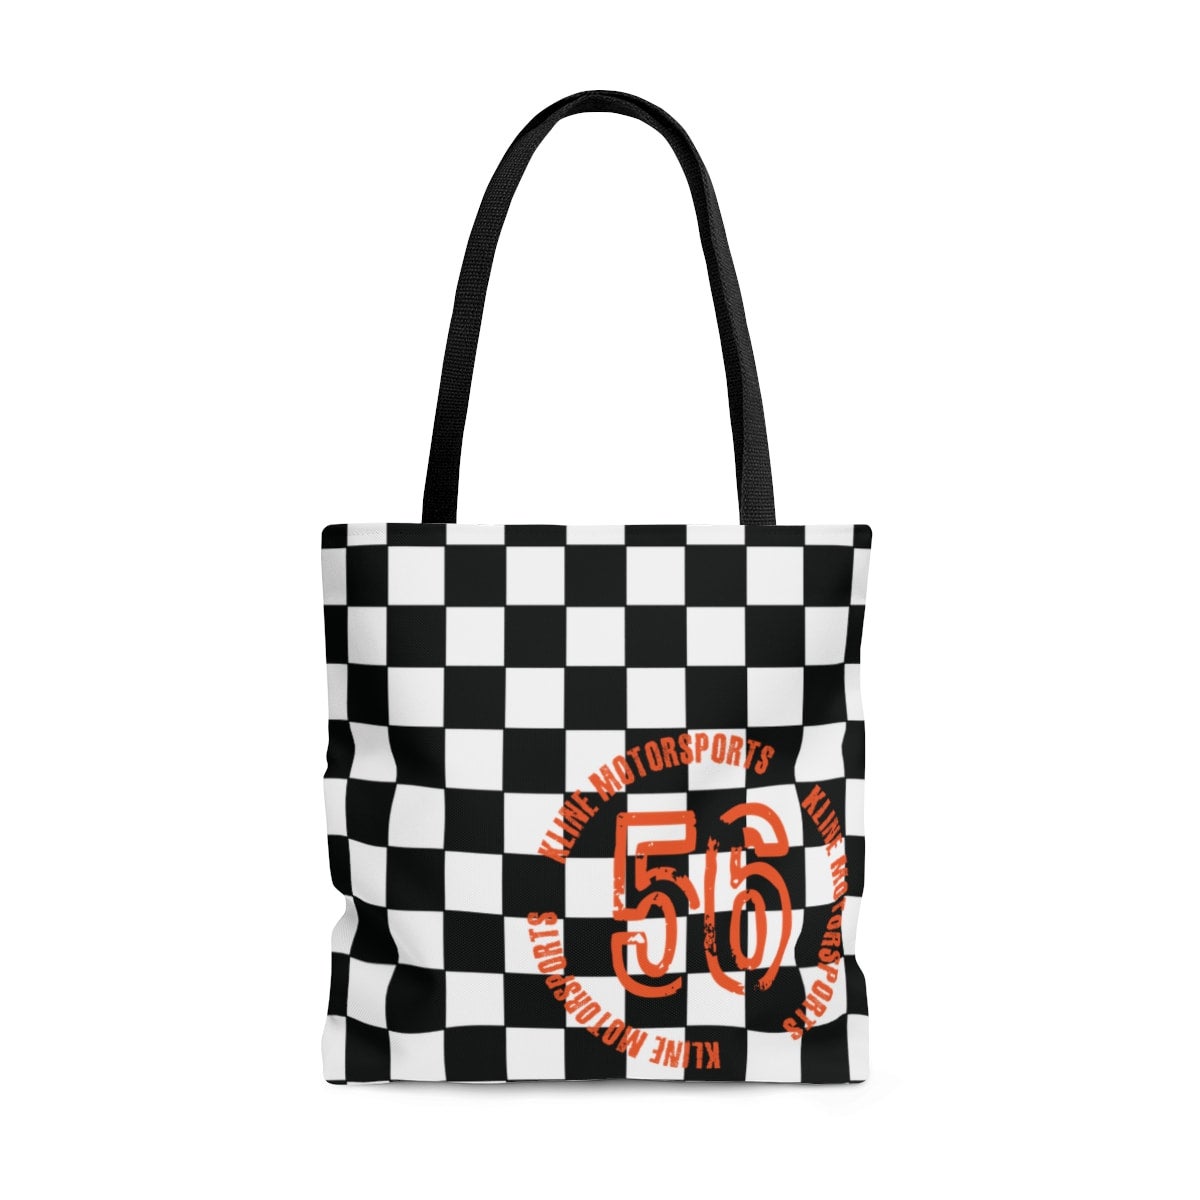 louis vuitton grey and white checkered bag